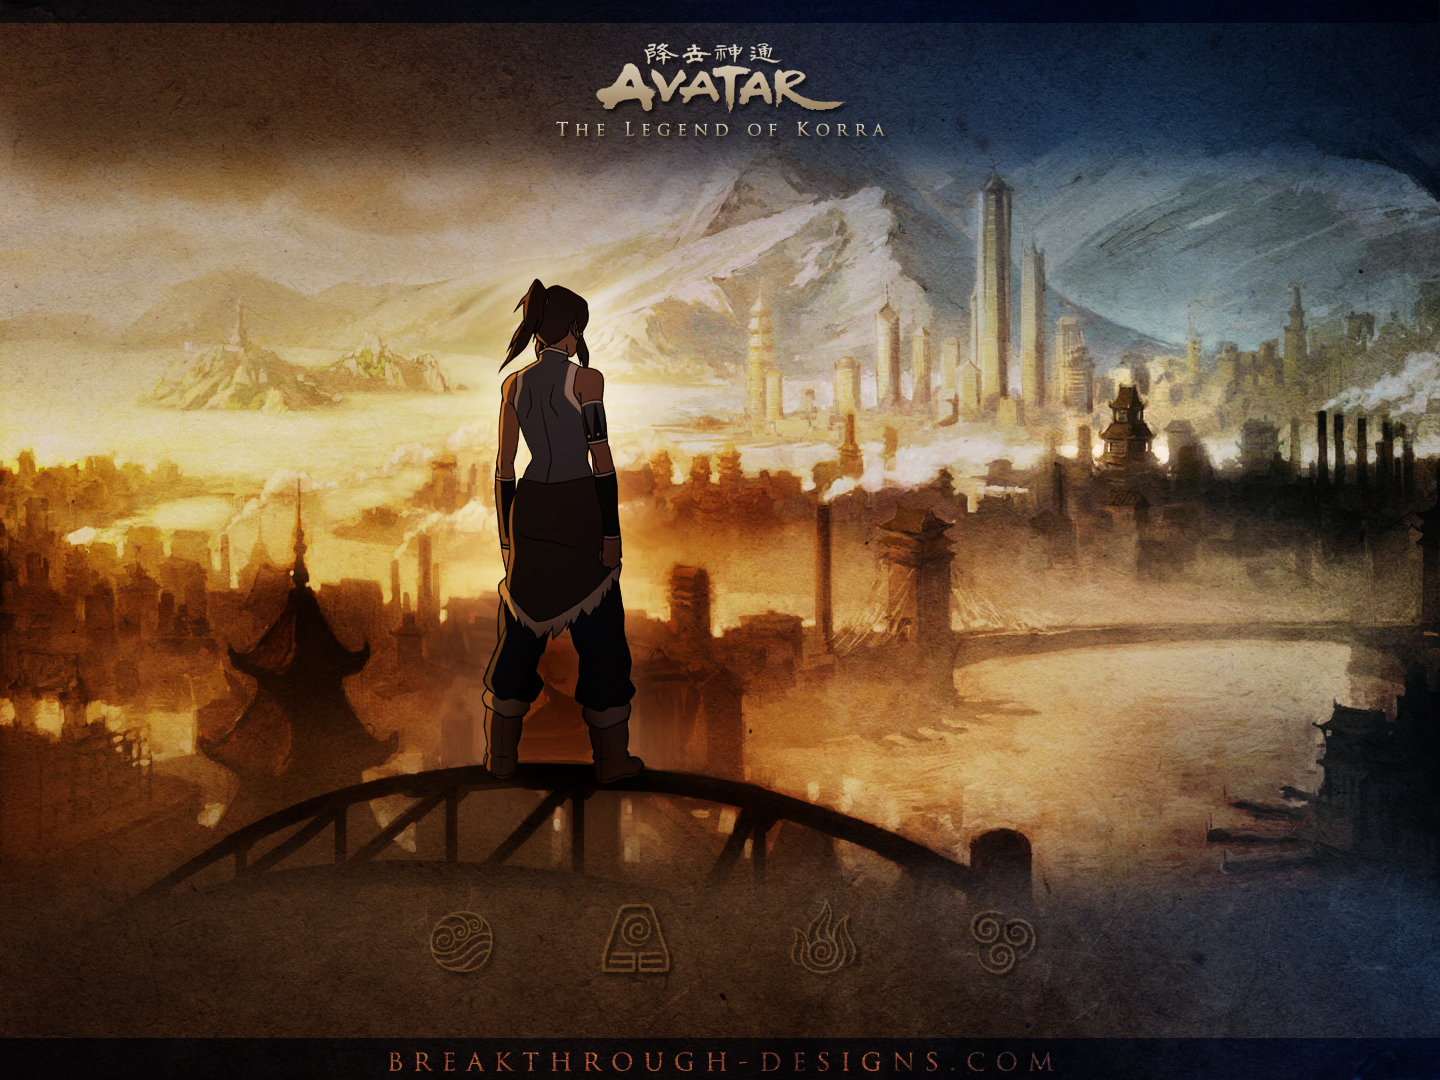 The Last Airbender Image Avatar Legend Of Korra Wallpaper Photos